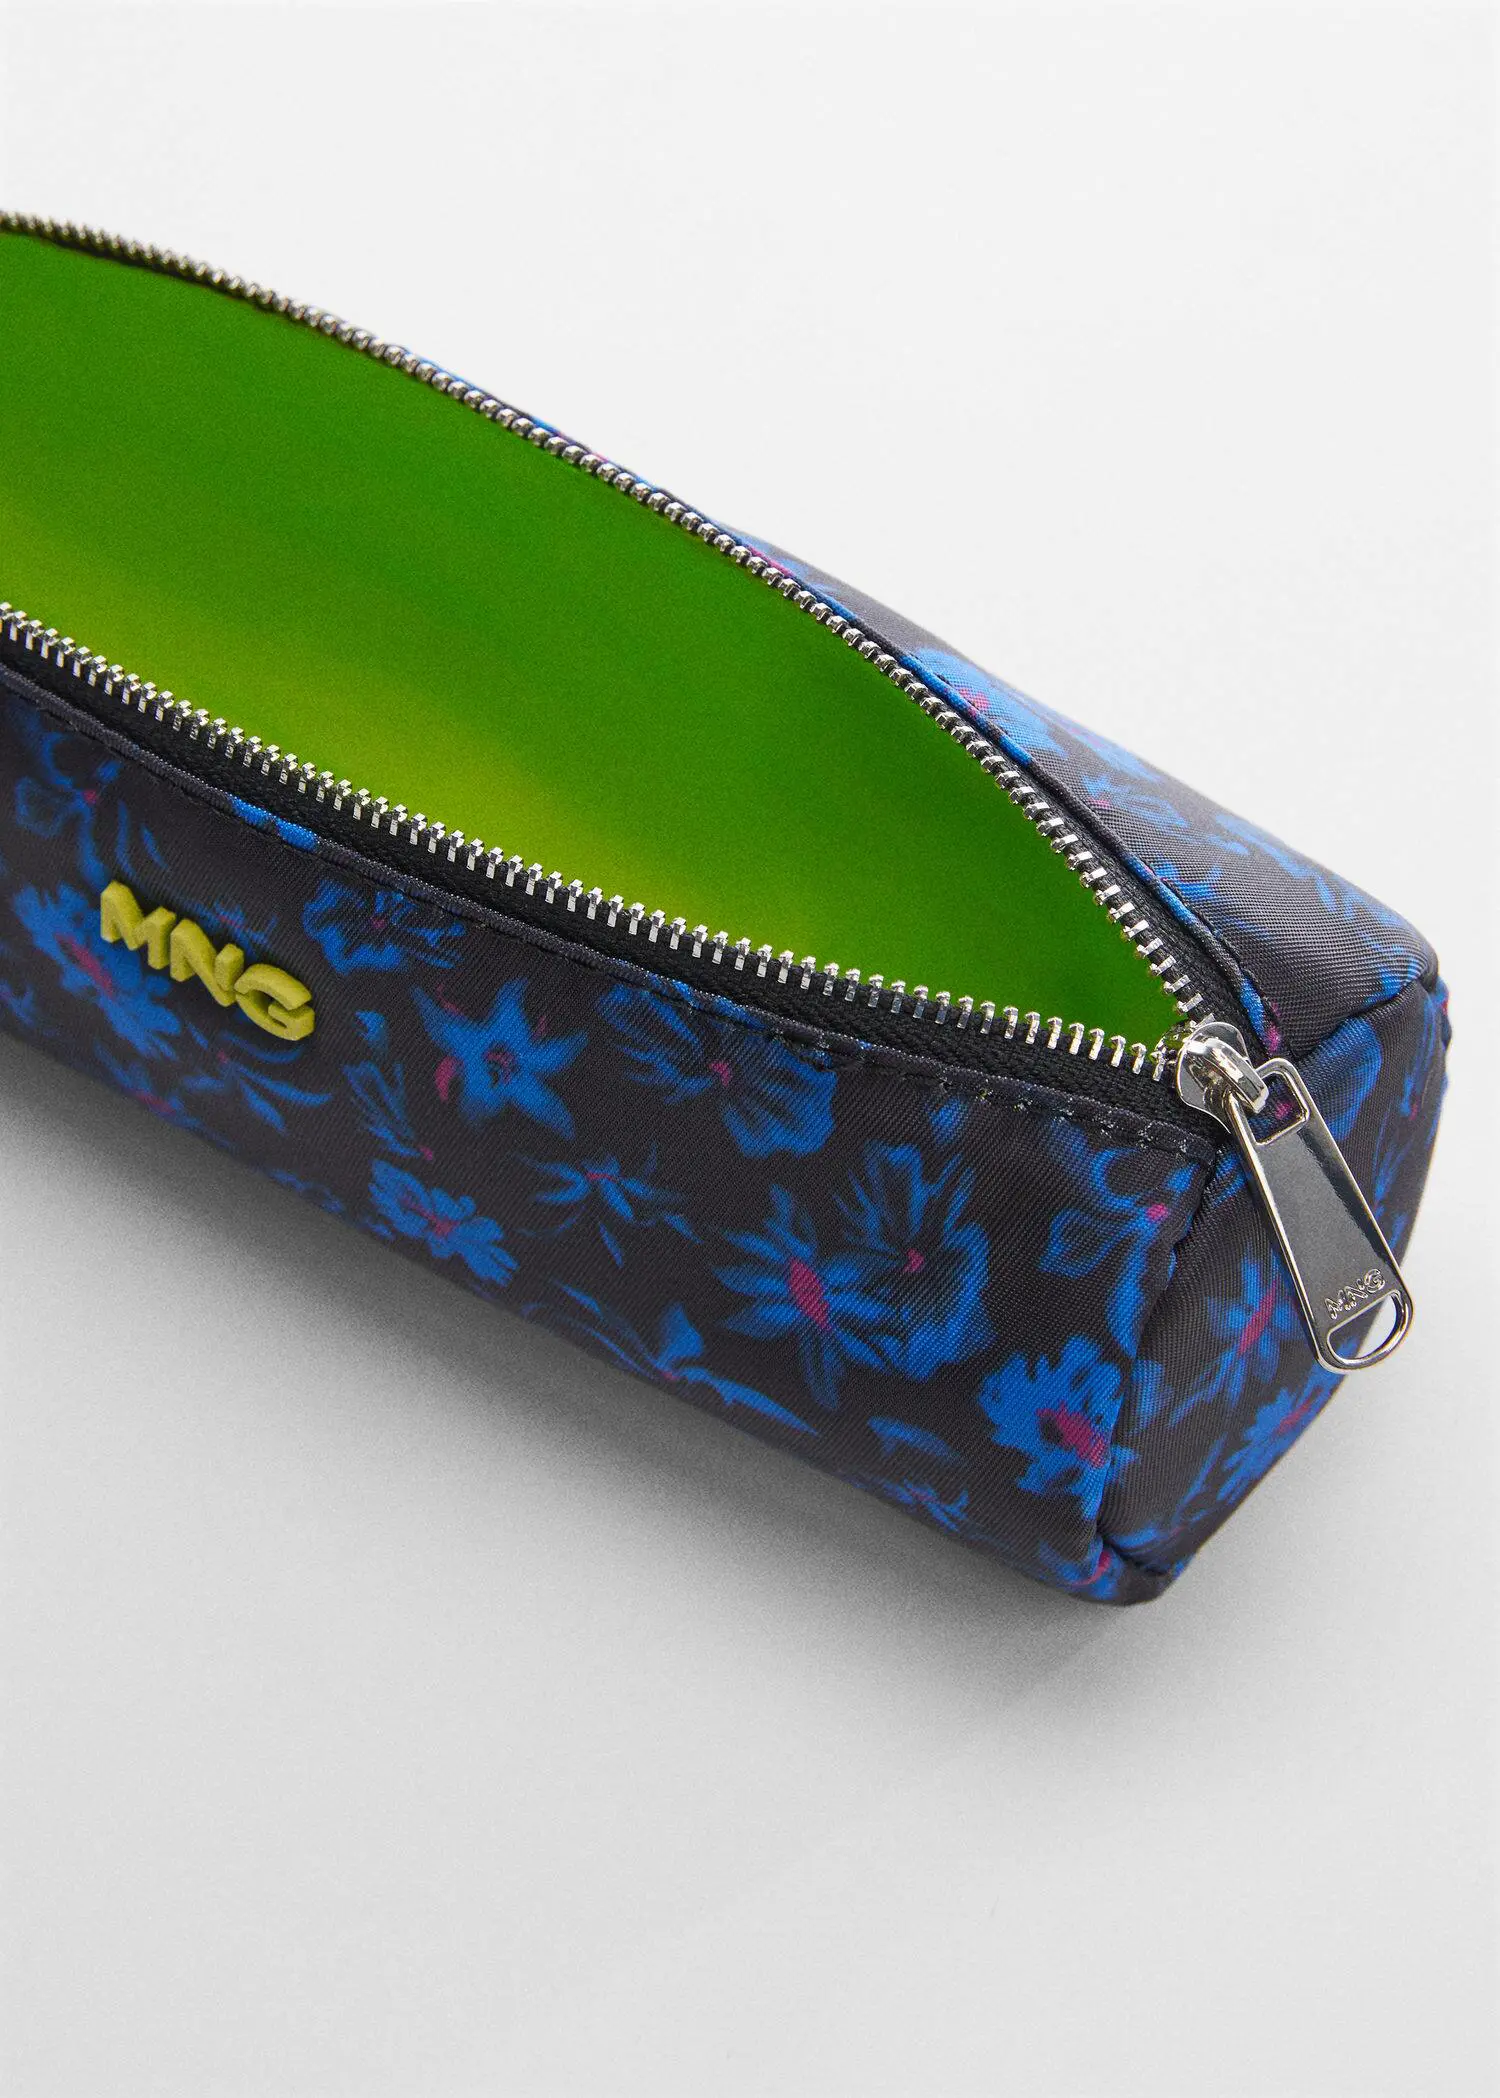 Mango Logo zipped pencil case. a close-up view of the inside of a pencil case. 